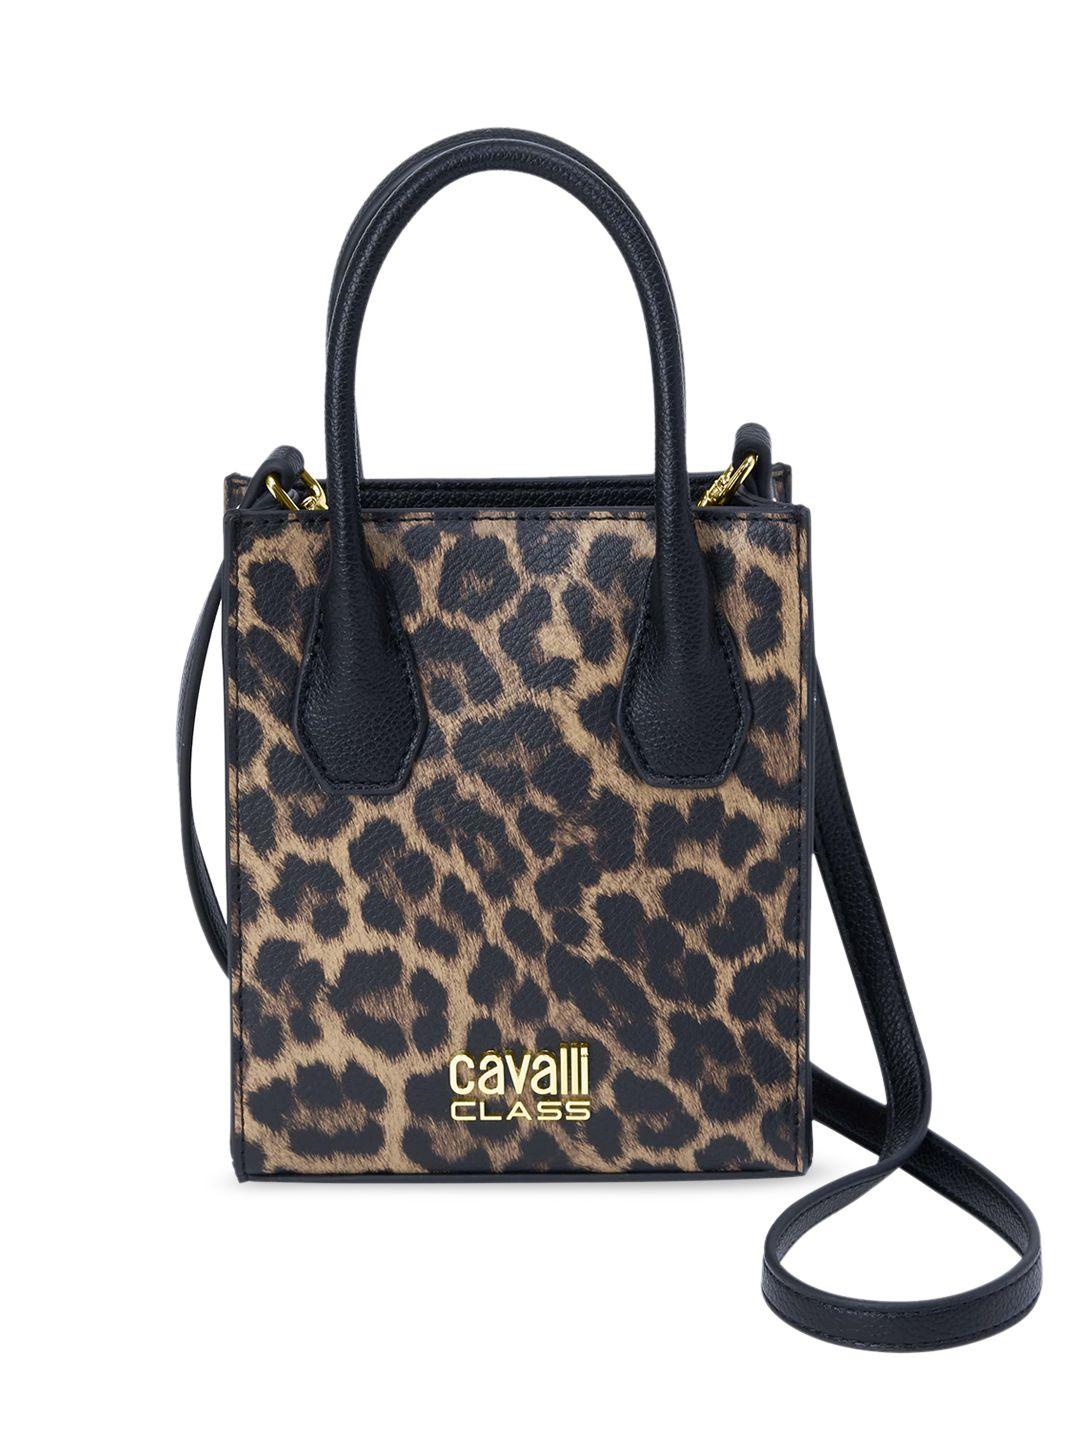 cavalli class black animal printed structured satchel